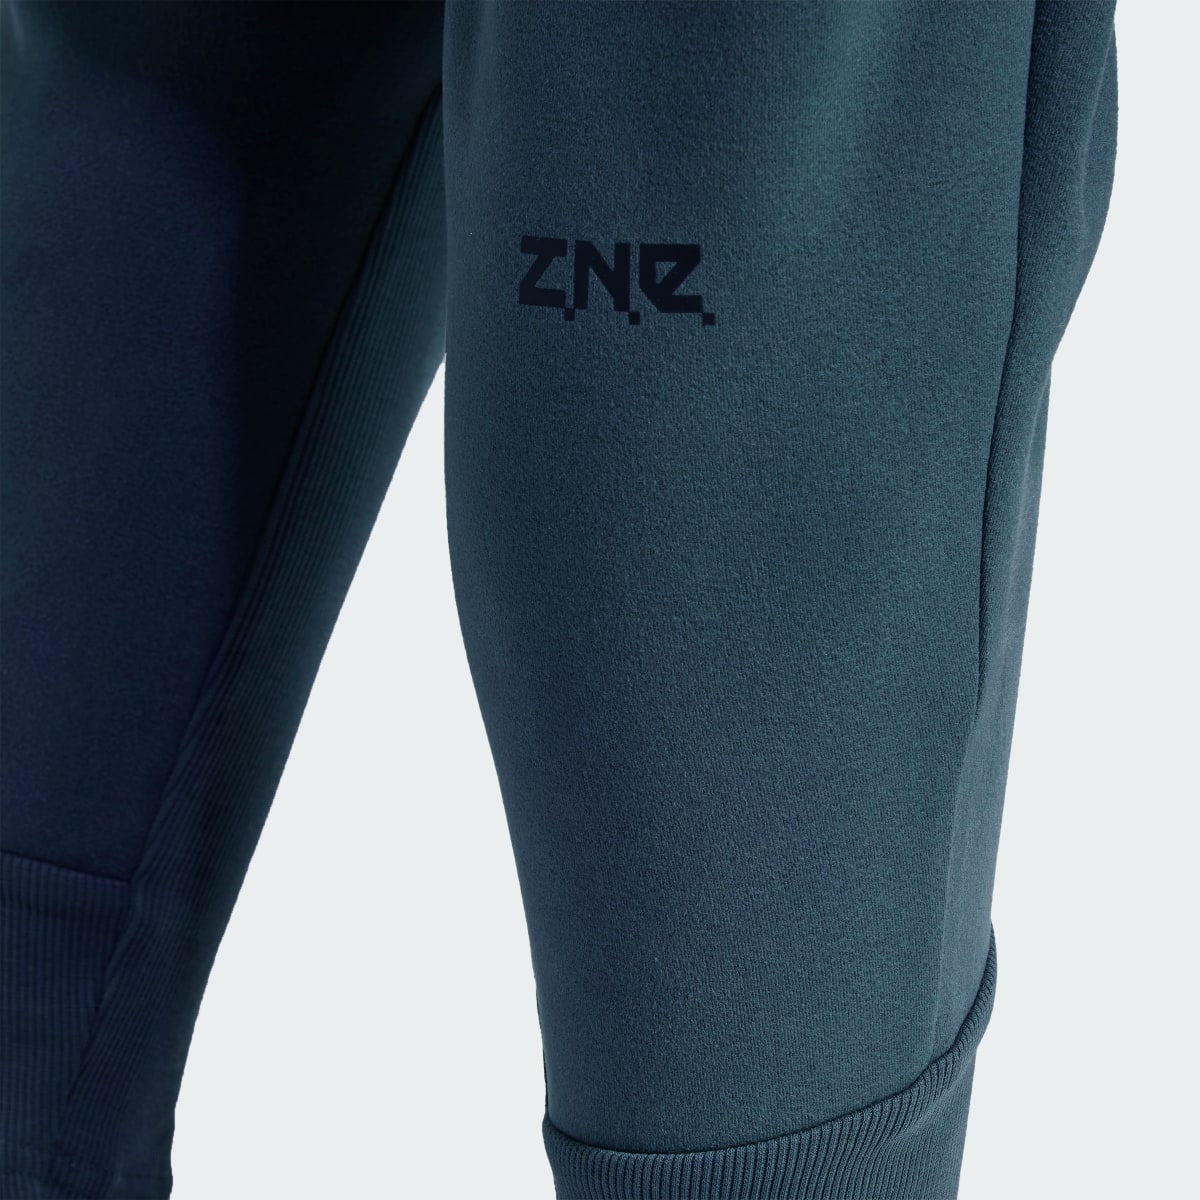 Adidas Z.N.E. Winterized Hose. 5